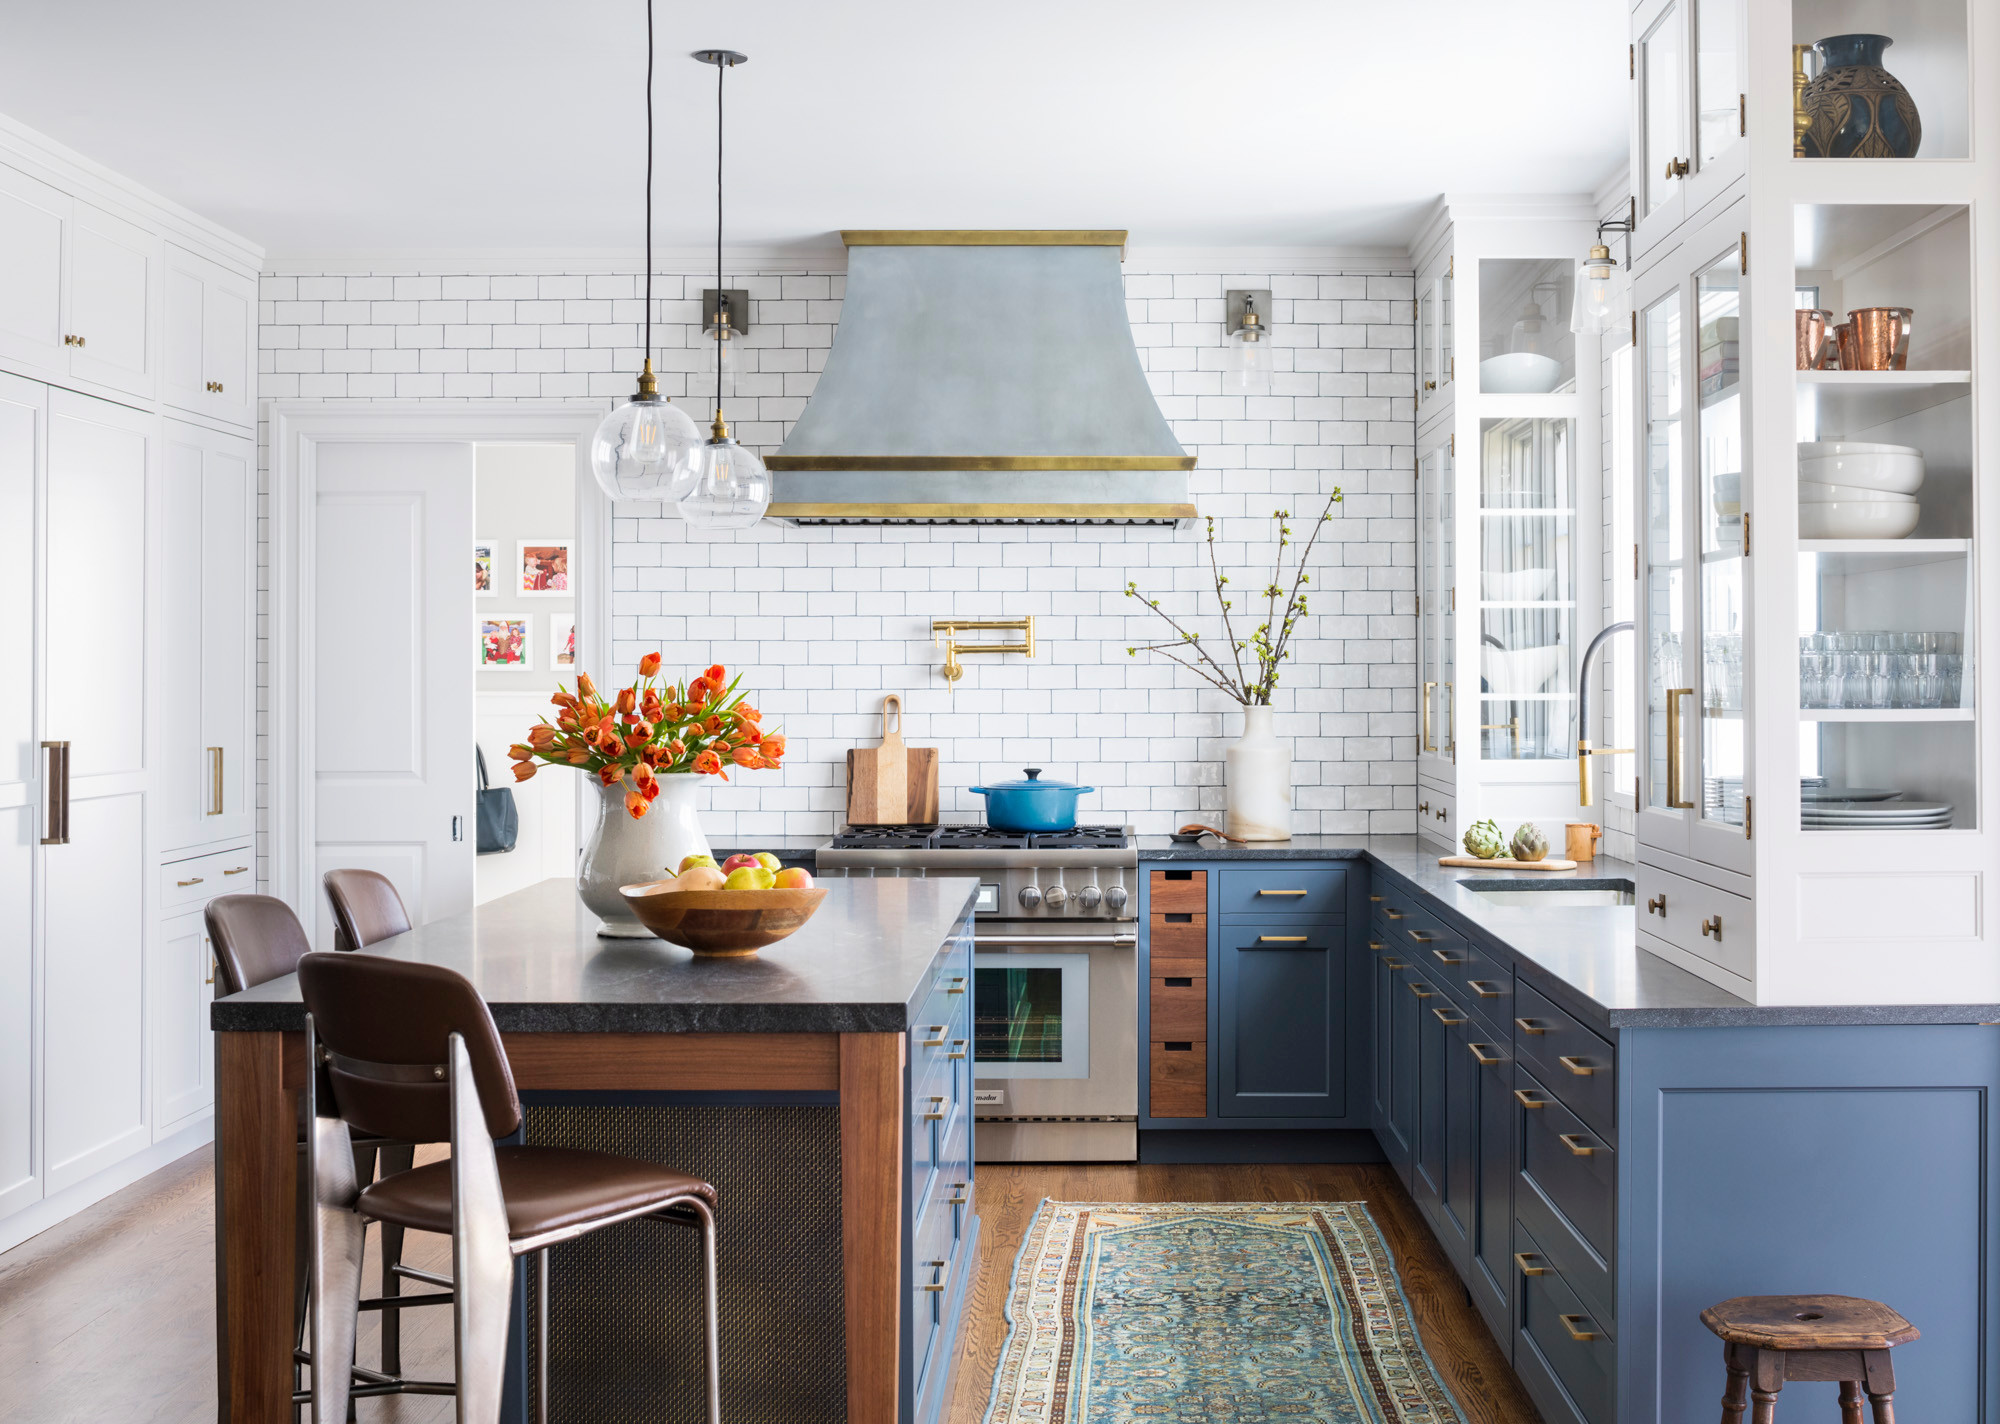 Kitchen Colorful Cabinets Ceramic Tile Backsplashes Design Photos